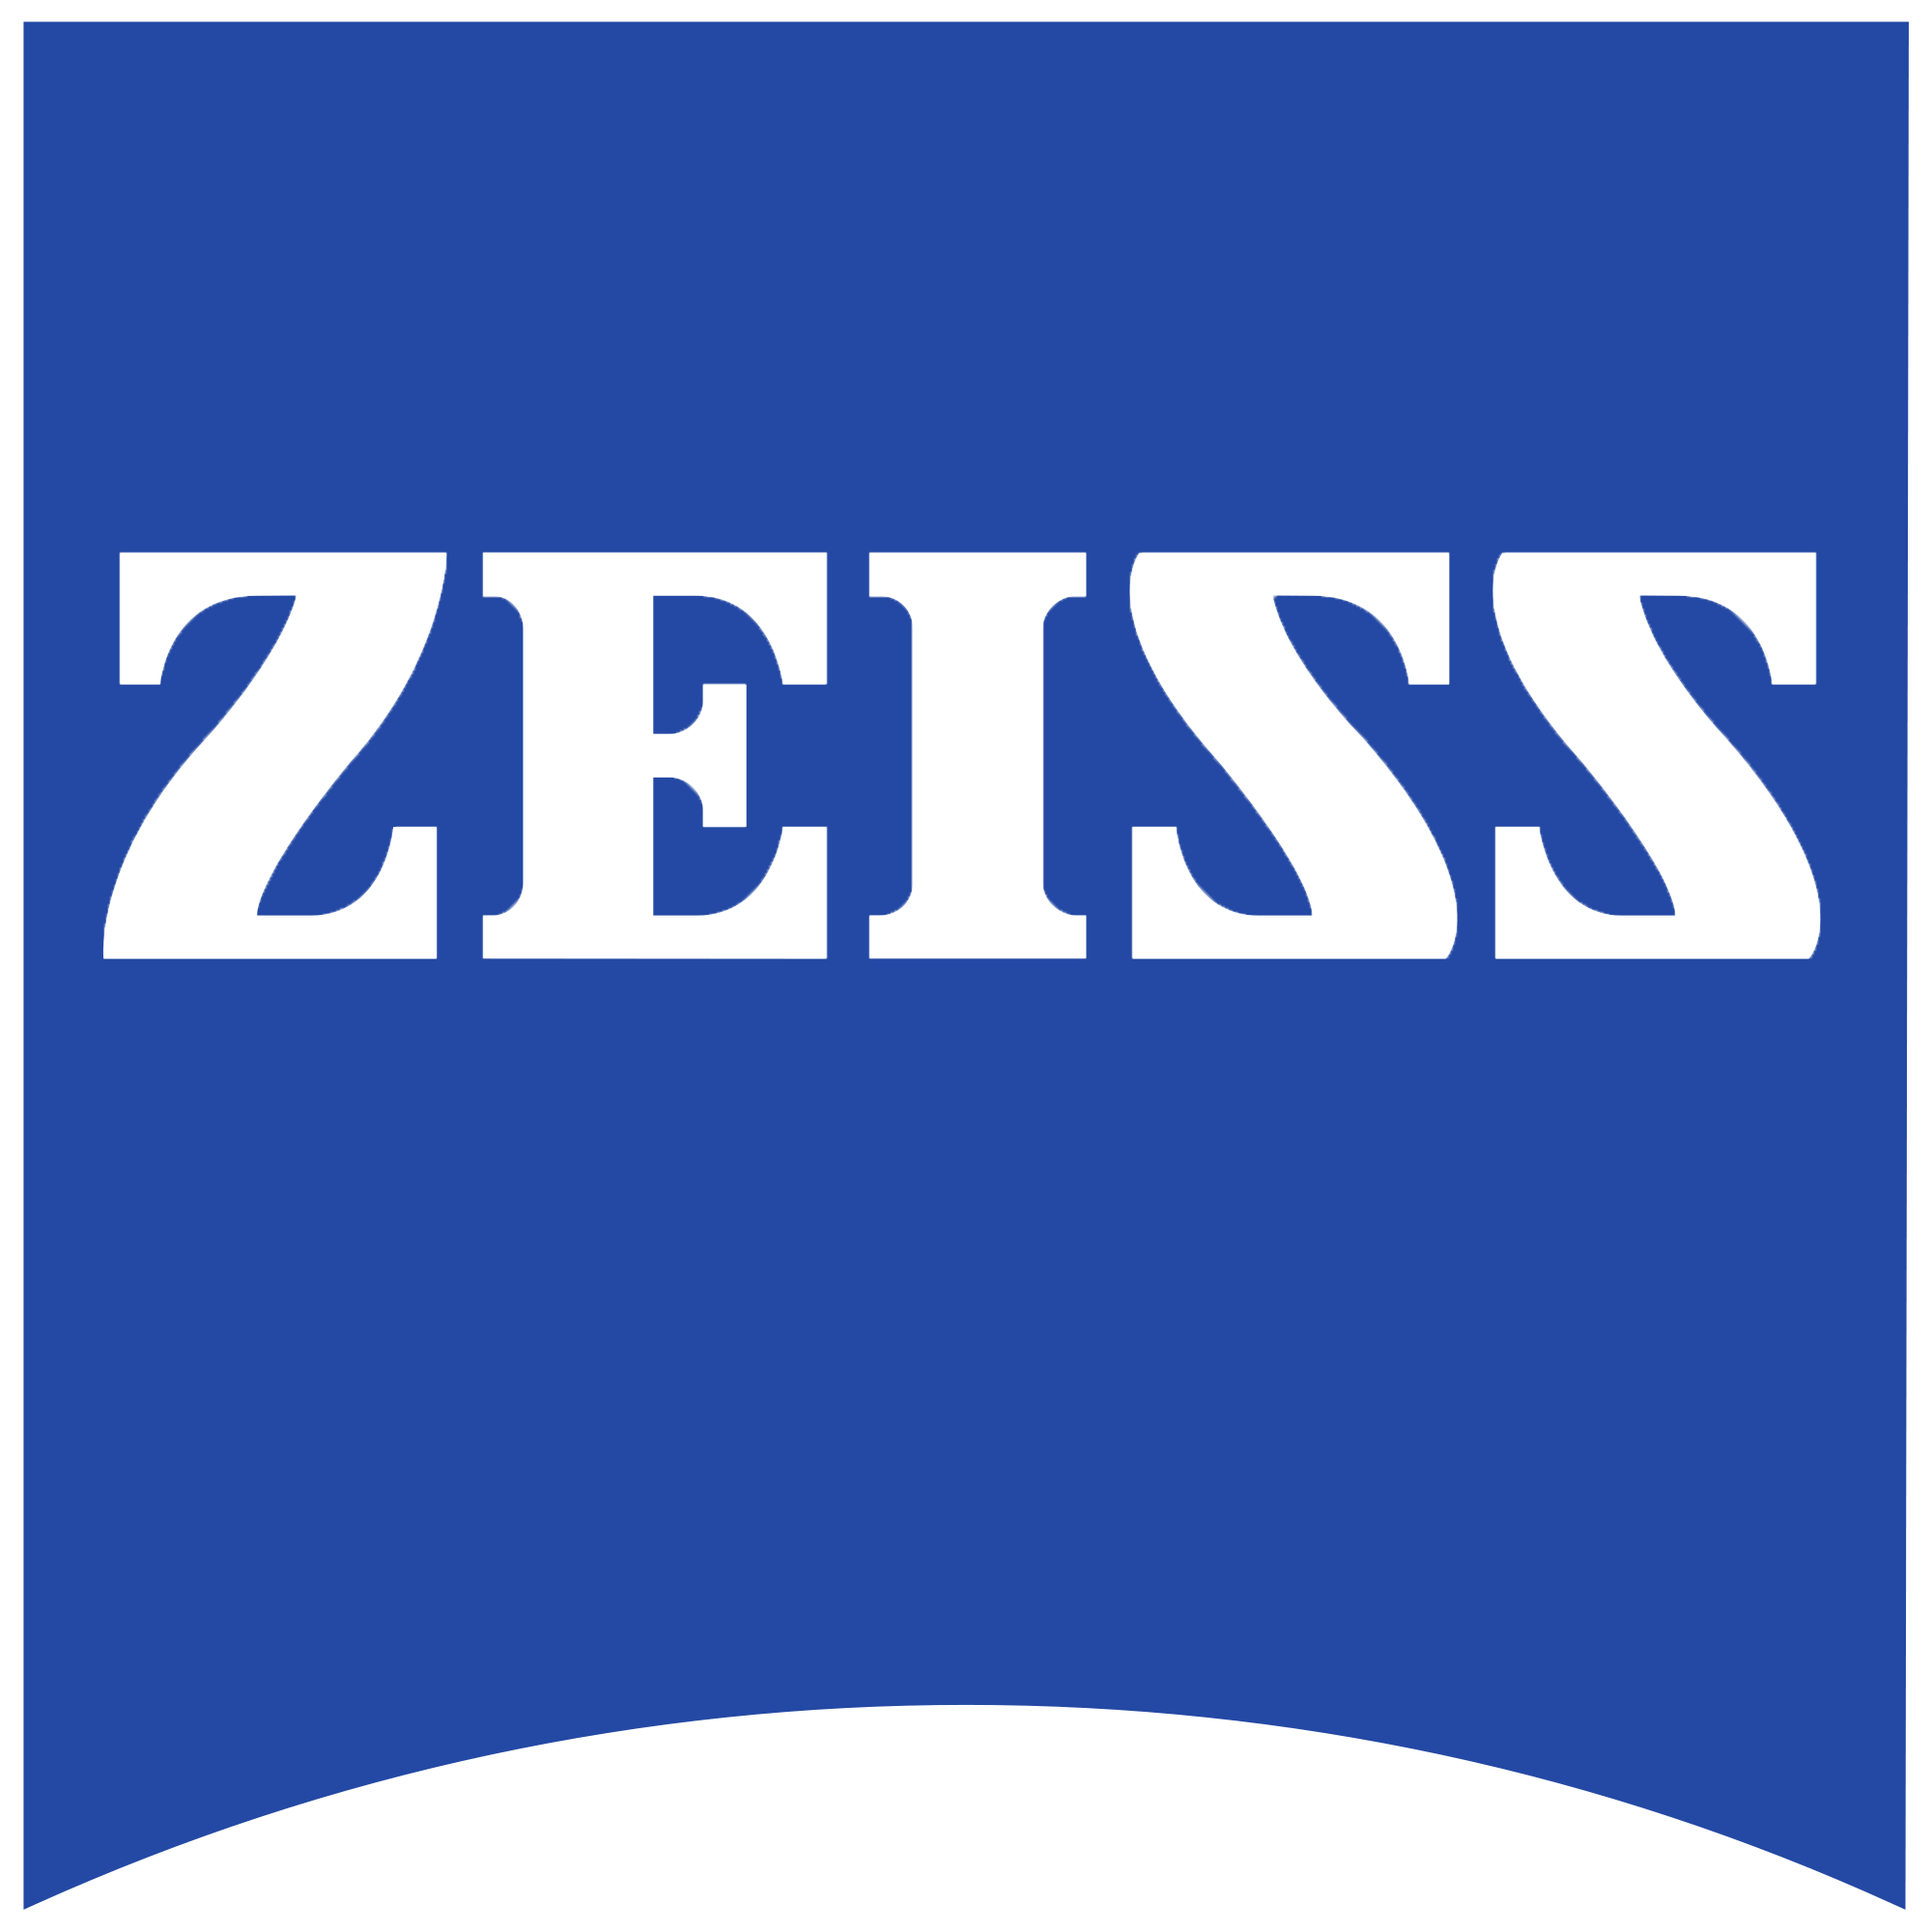 Carl Zeiss Logo